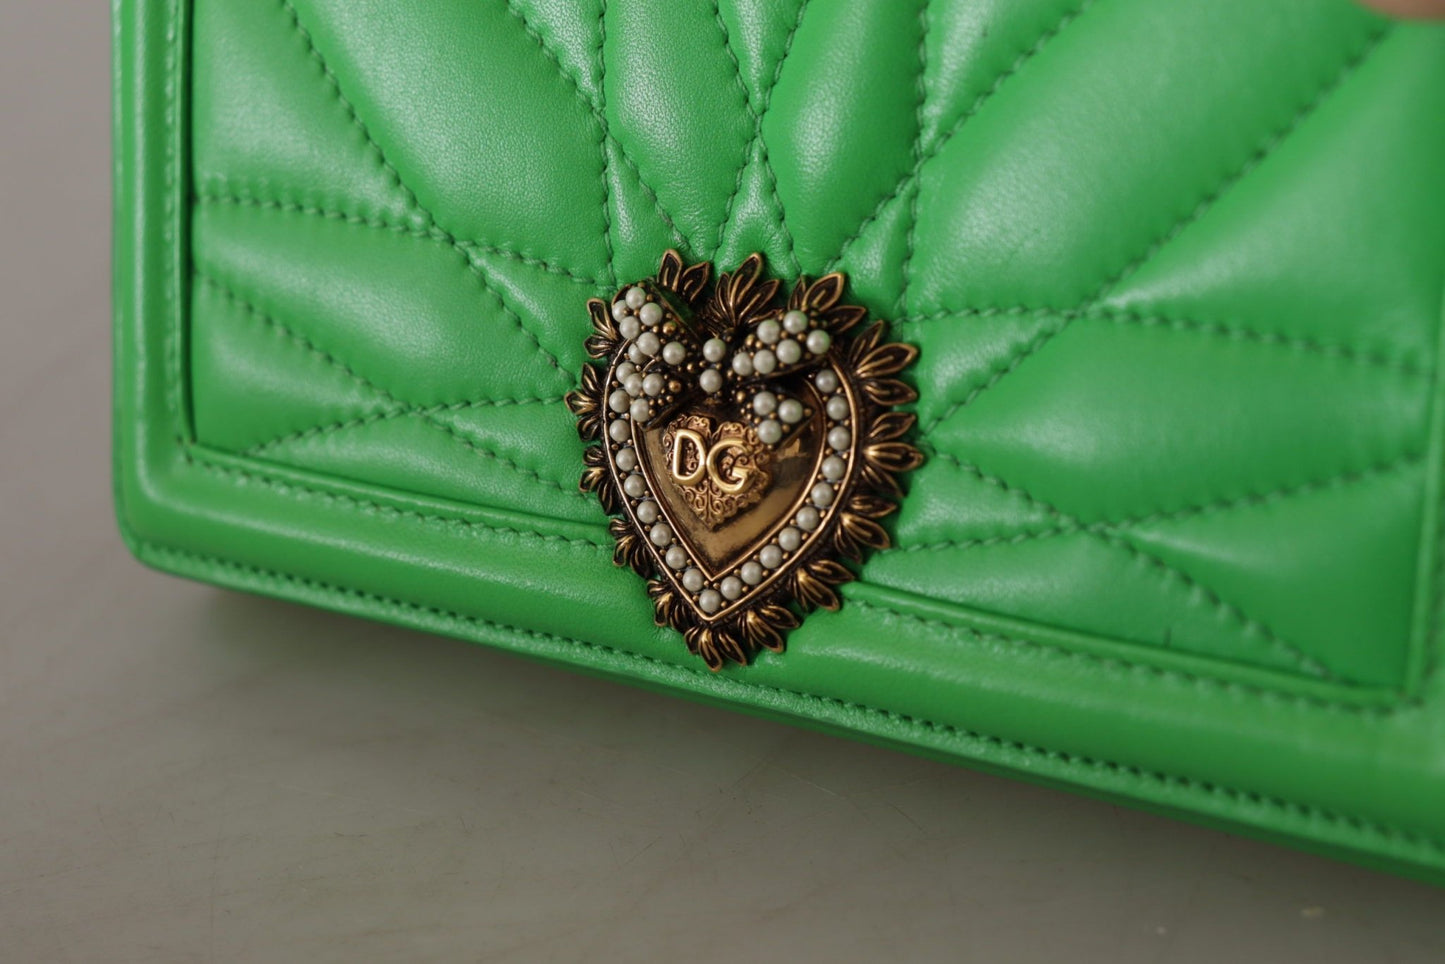 Dolce & Gabbana Green Leather Devotion Cardholder IPHONE 11 PRO Wallet